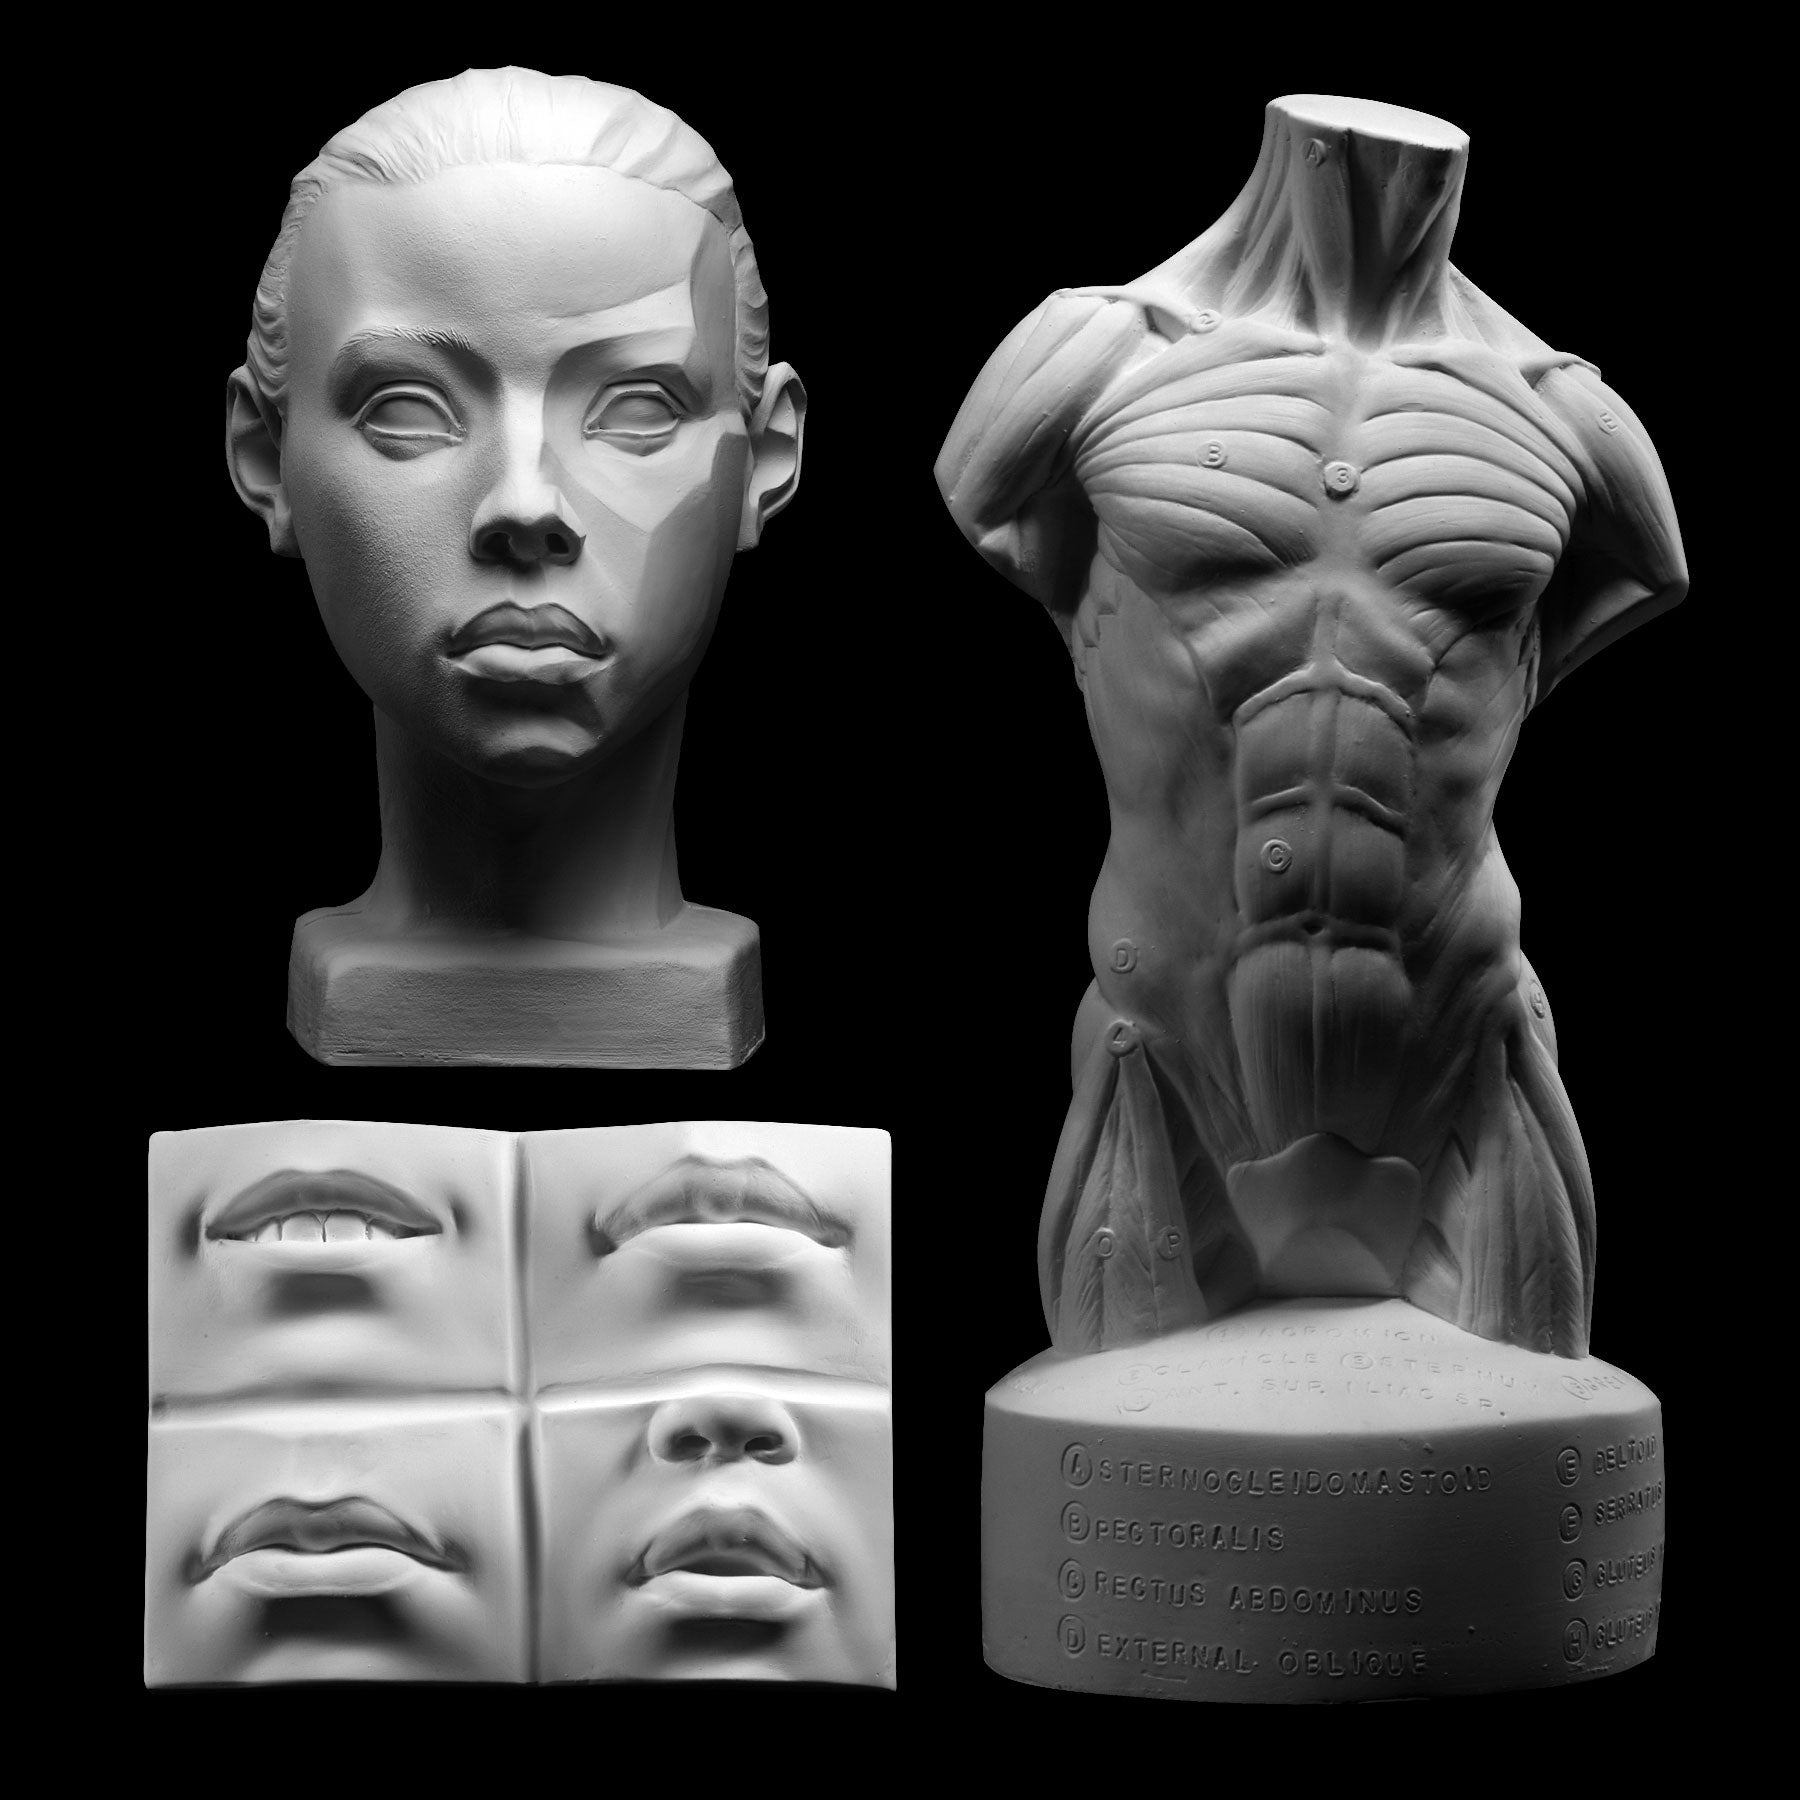 Sculpting, Head anatomy, Digital sculpture